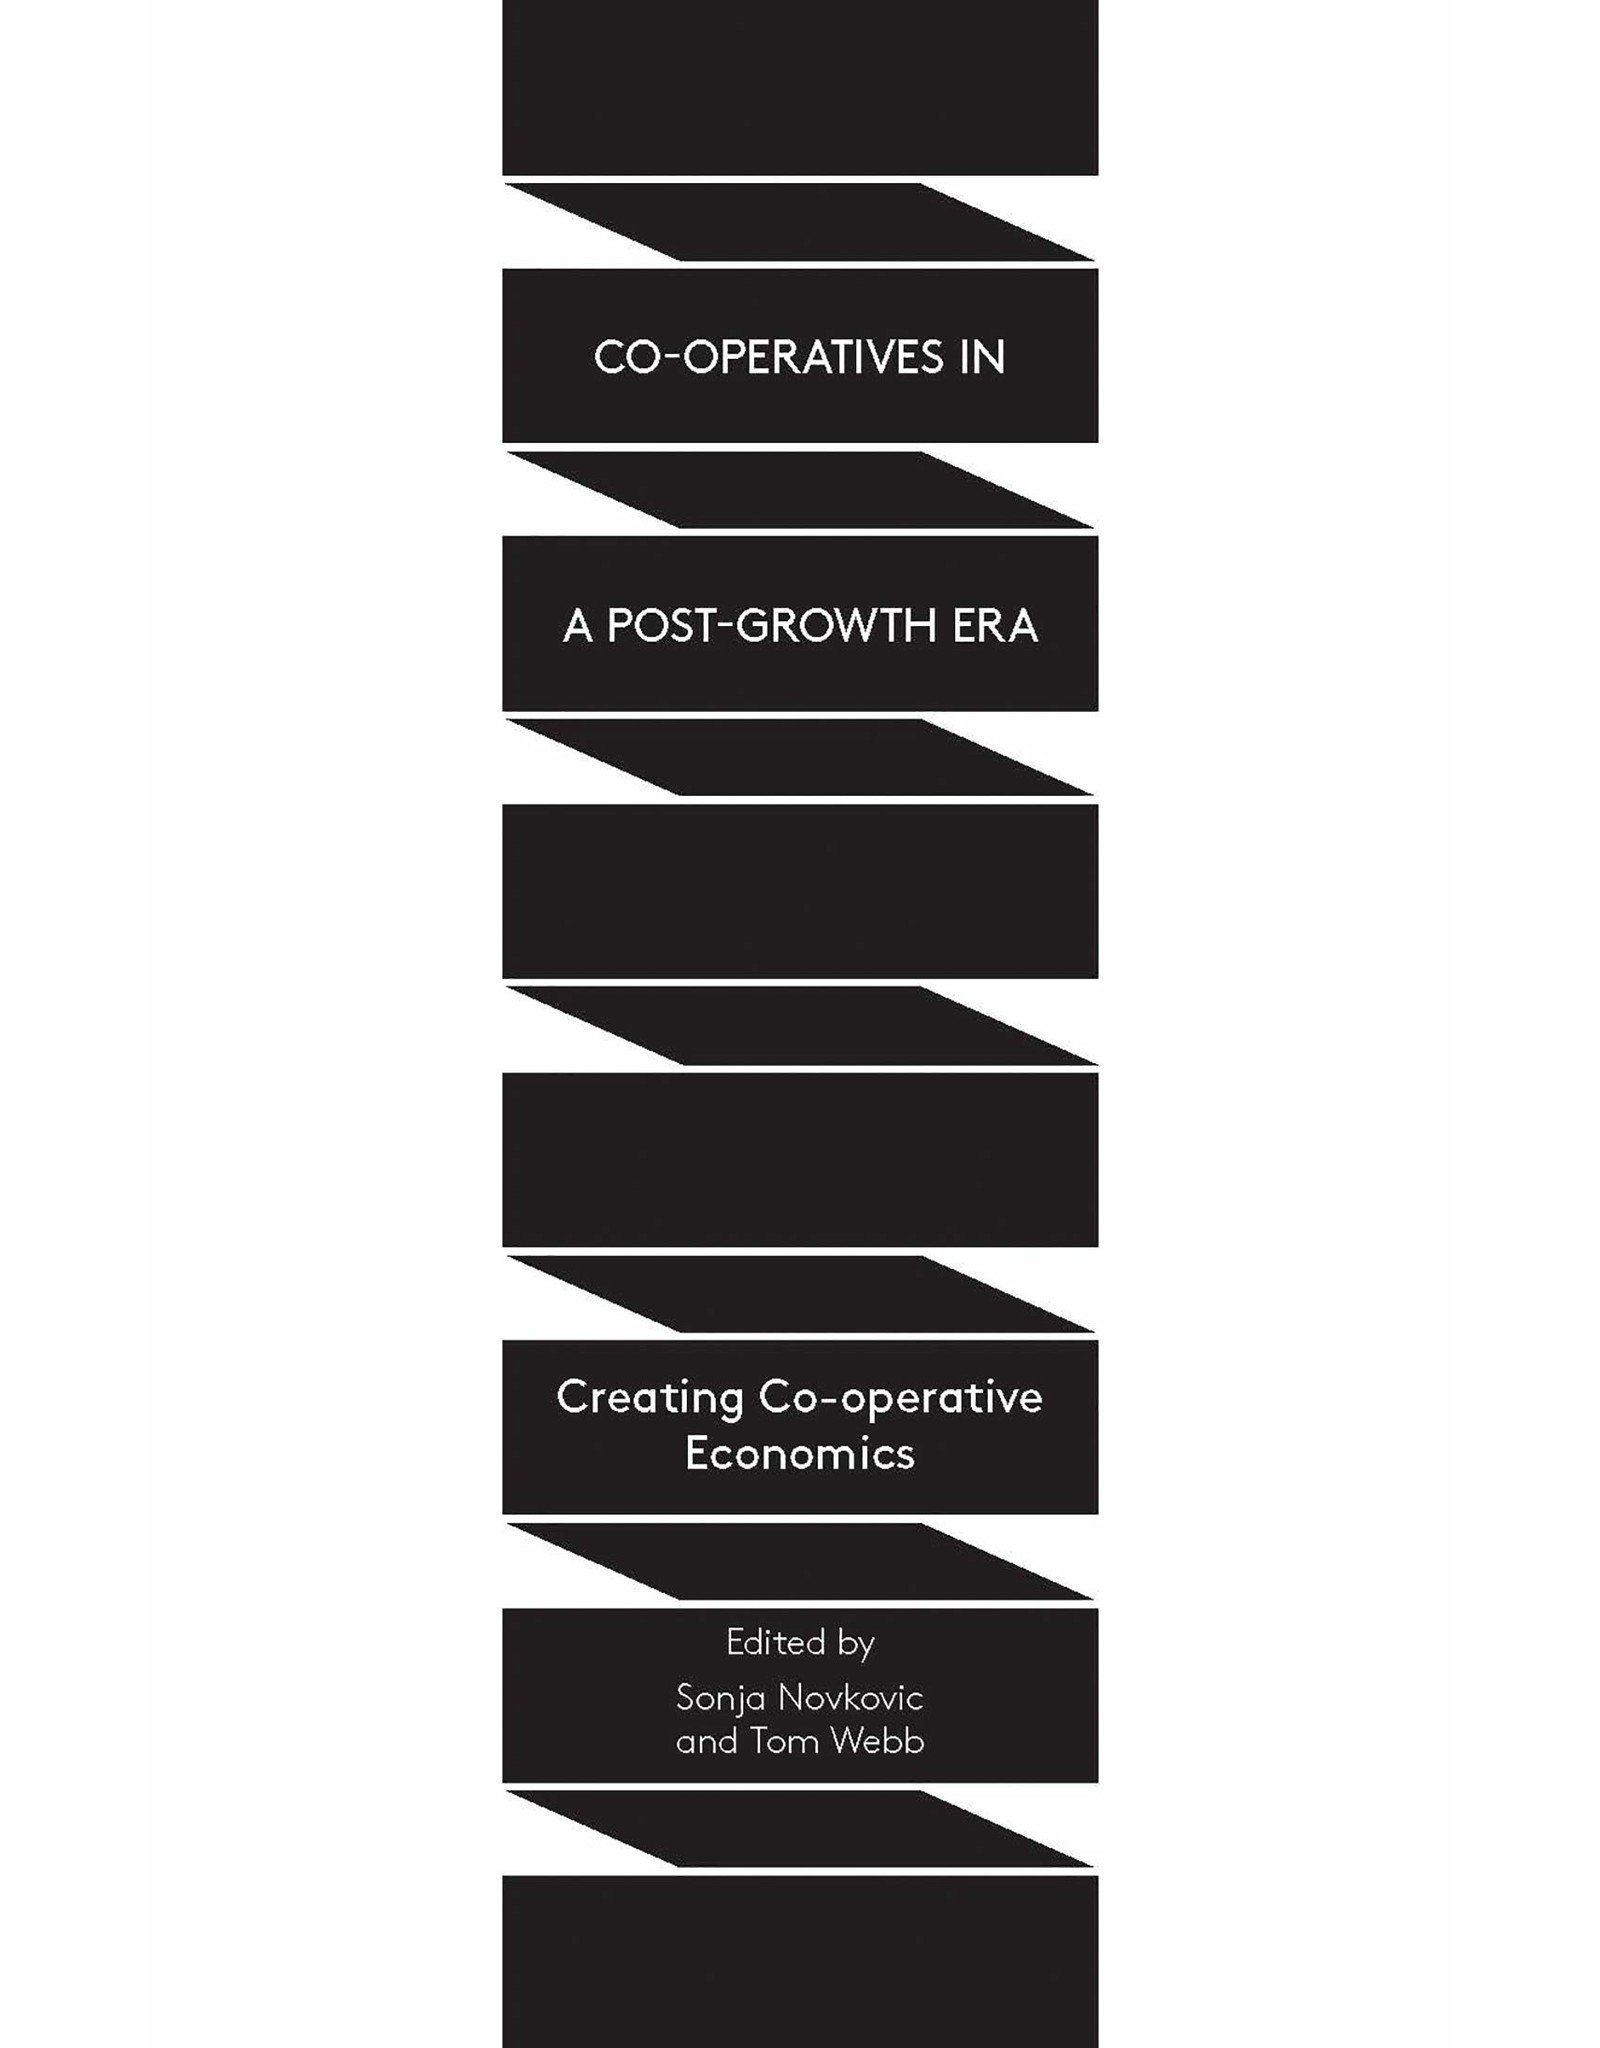 Literature Co-operatives in a Post-Growth Era: Creating Co-operative Economics